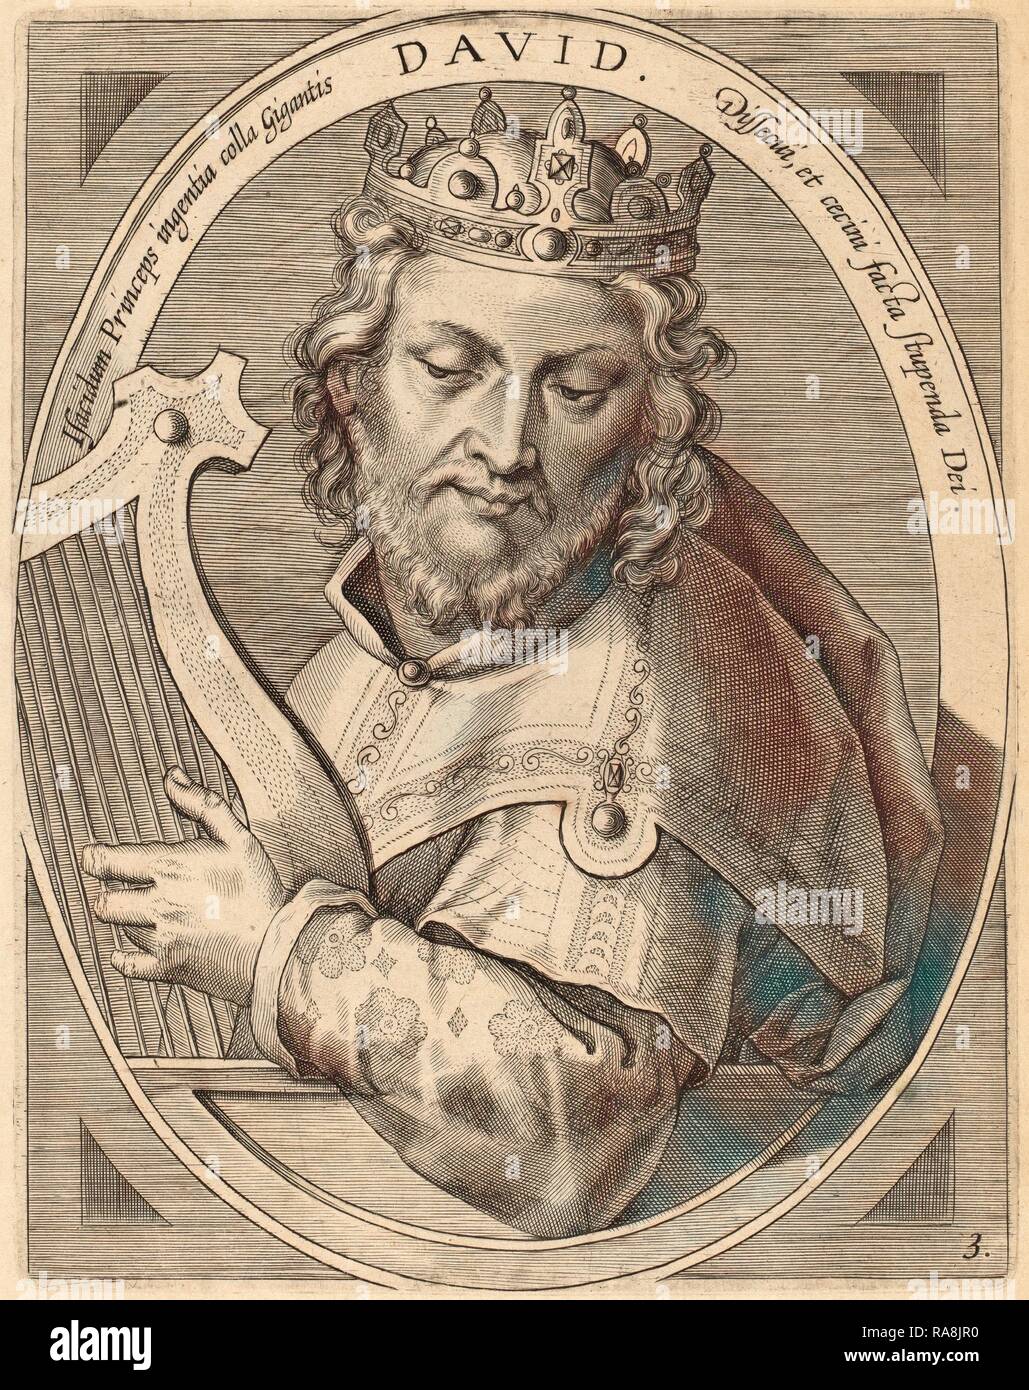 Theodor Galle after Jan van der Straet (Flemish, c. 1571 - 1633), David, published 1613, engraving on laid paper reimagined Stock Photo